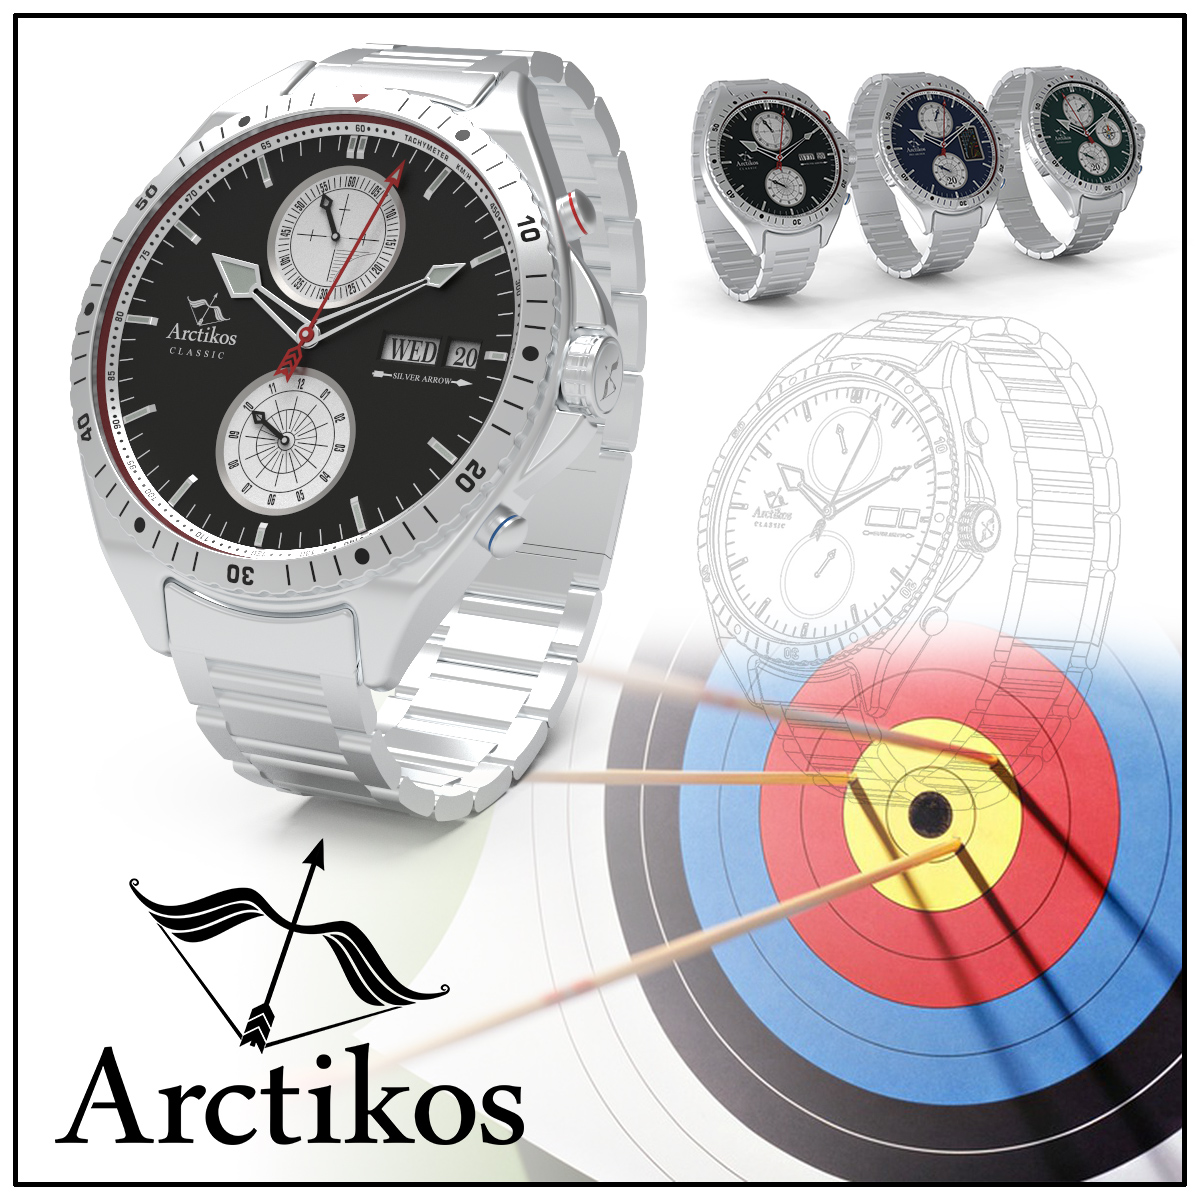 Arctikos Watches Branding